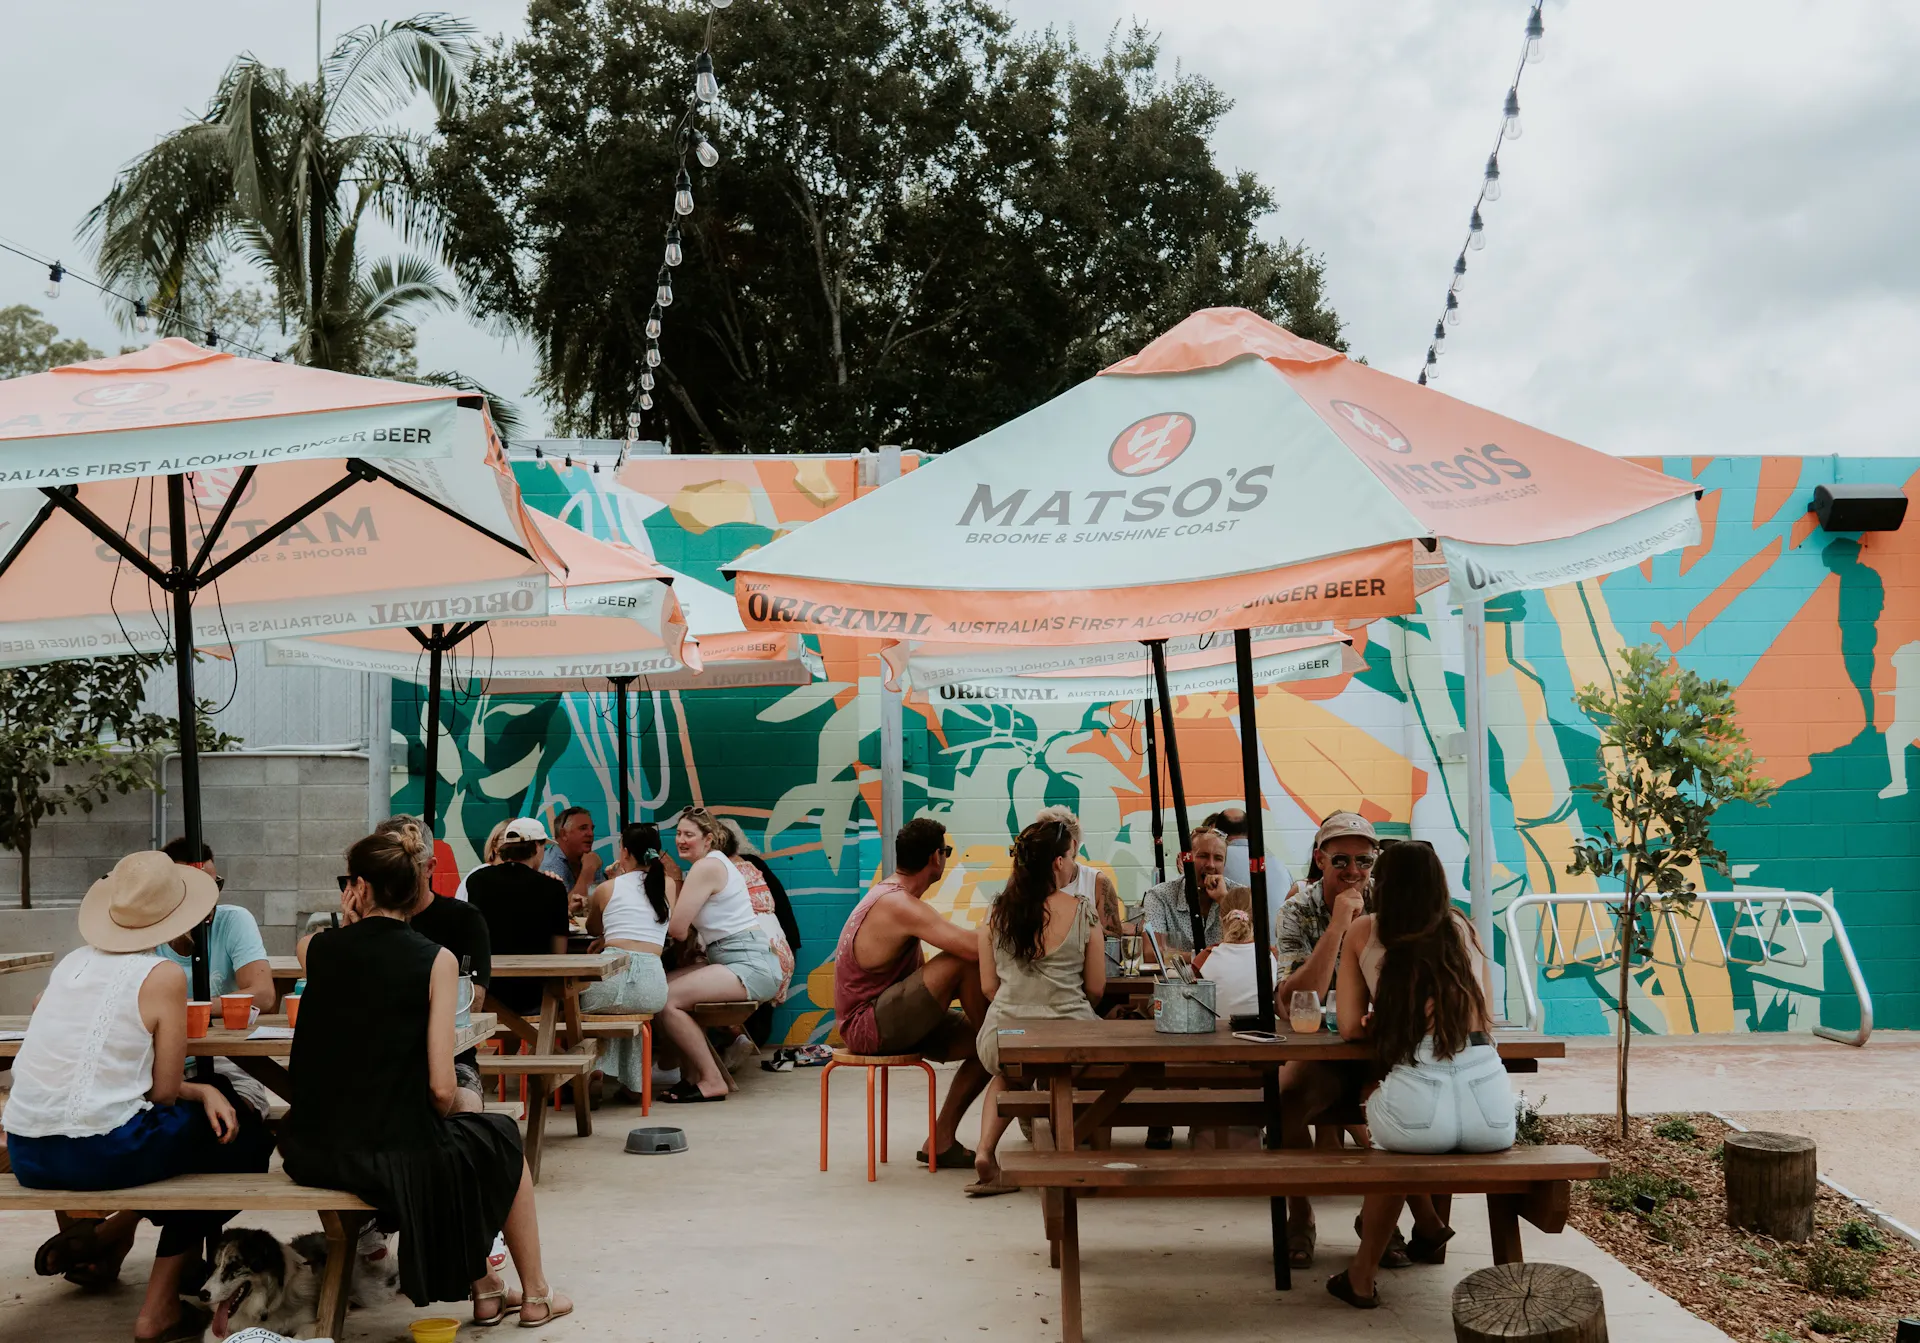 Matso's Sunshine Coast Beer Garden